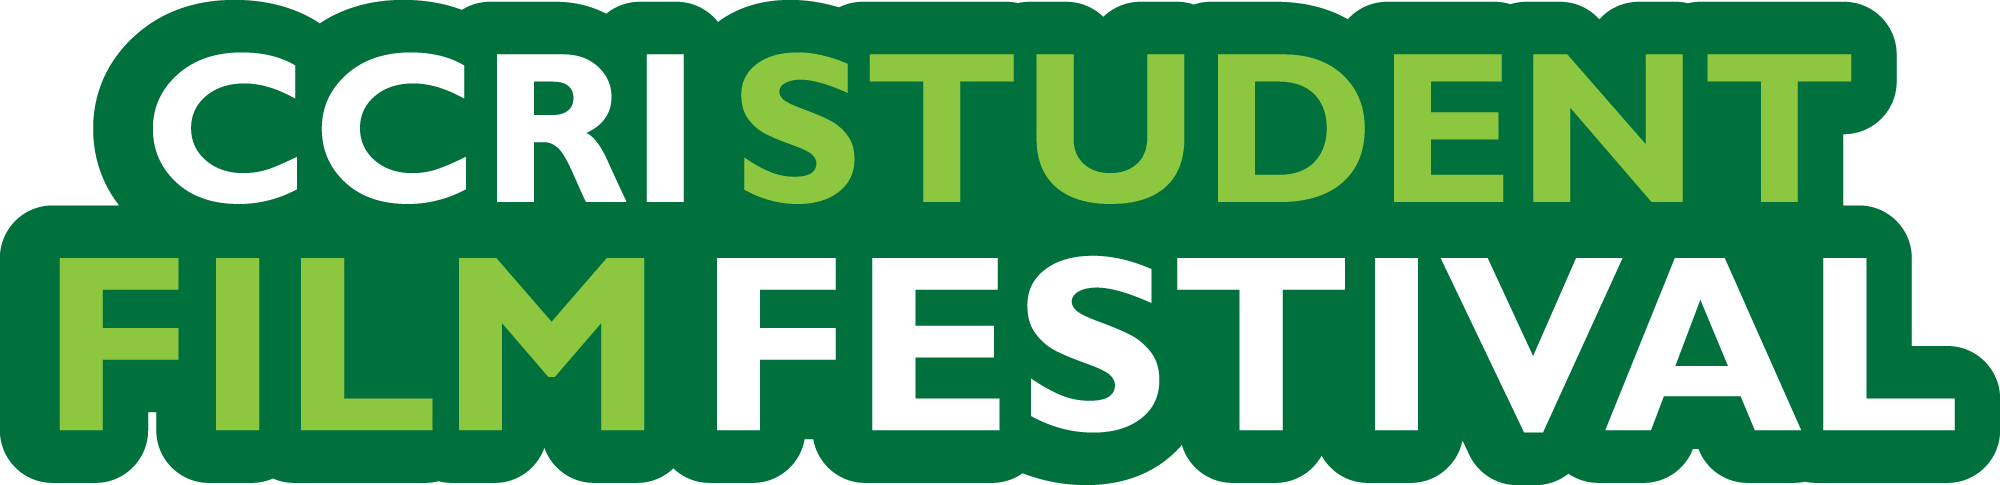 ccri student film fest green lime logo